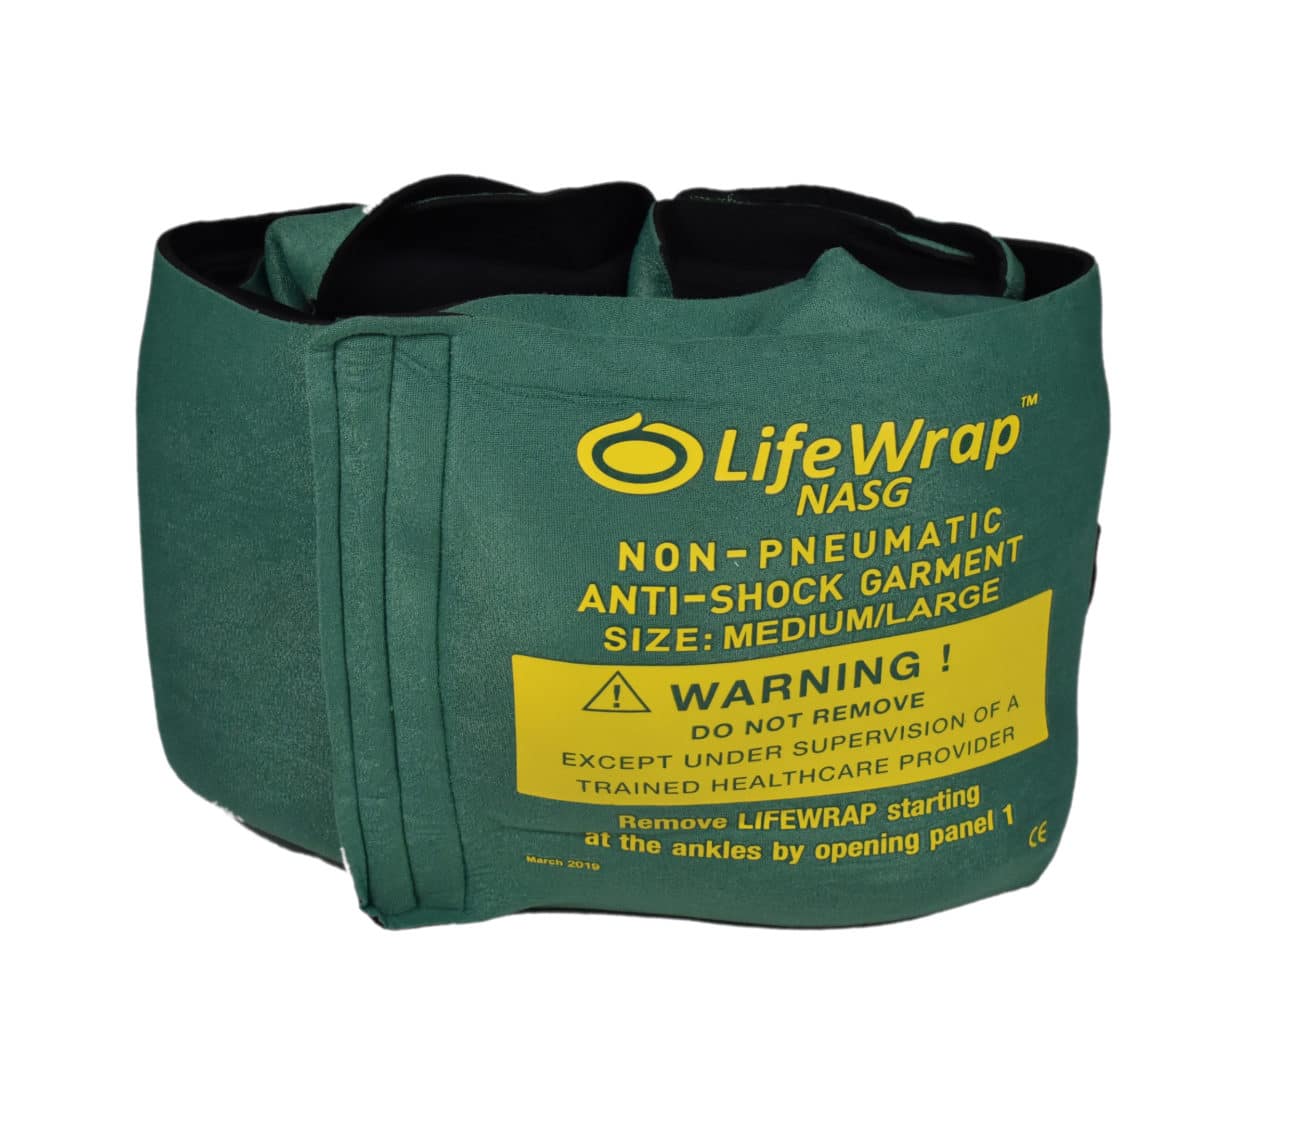 Buy the LifeWrap Non-Pneumatic Anti-Shock Garment (NASG